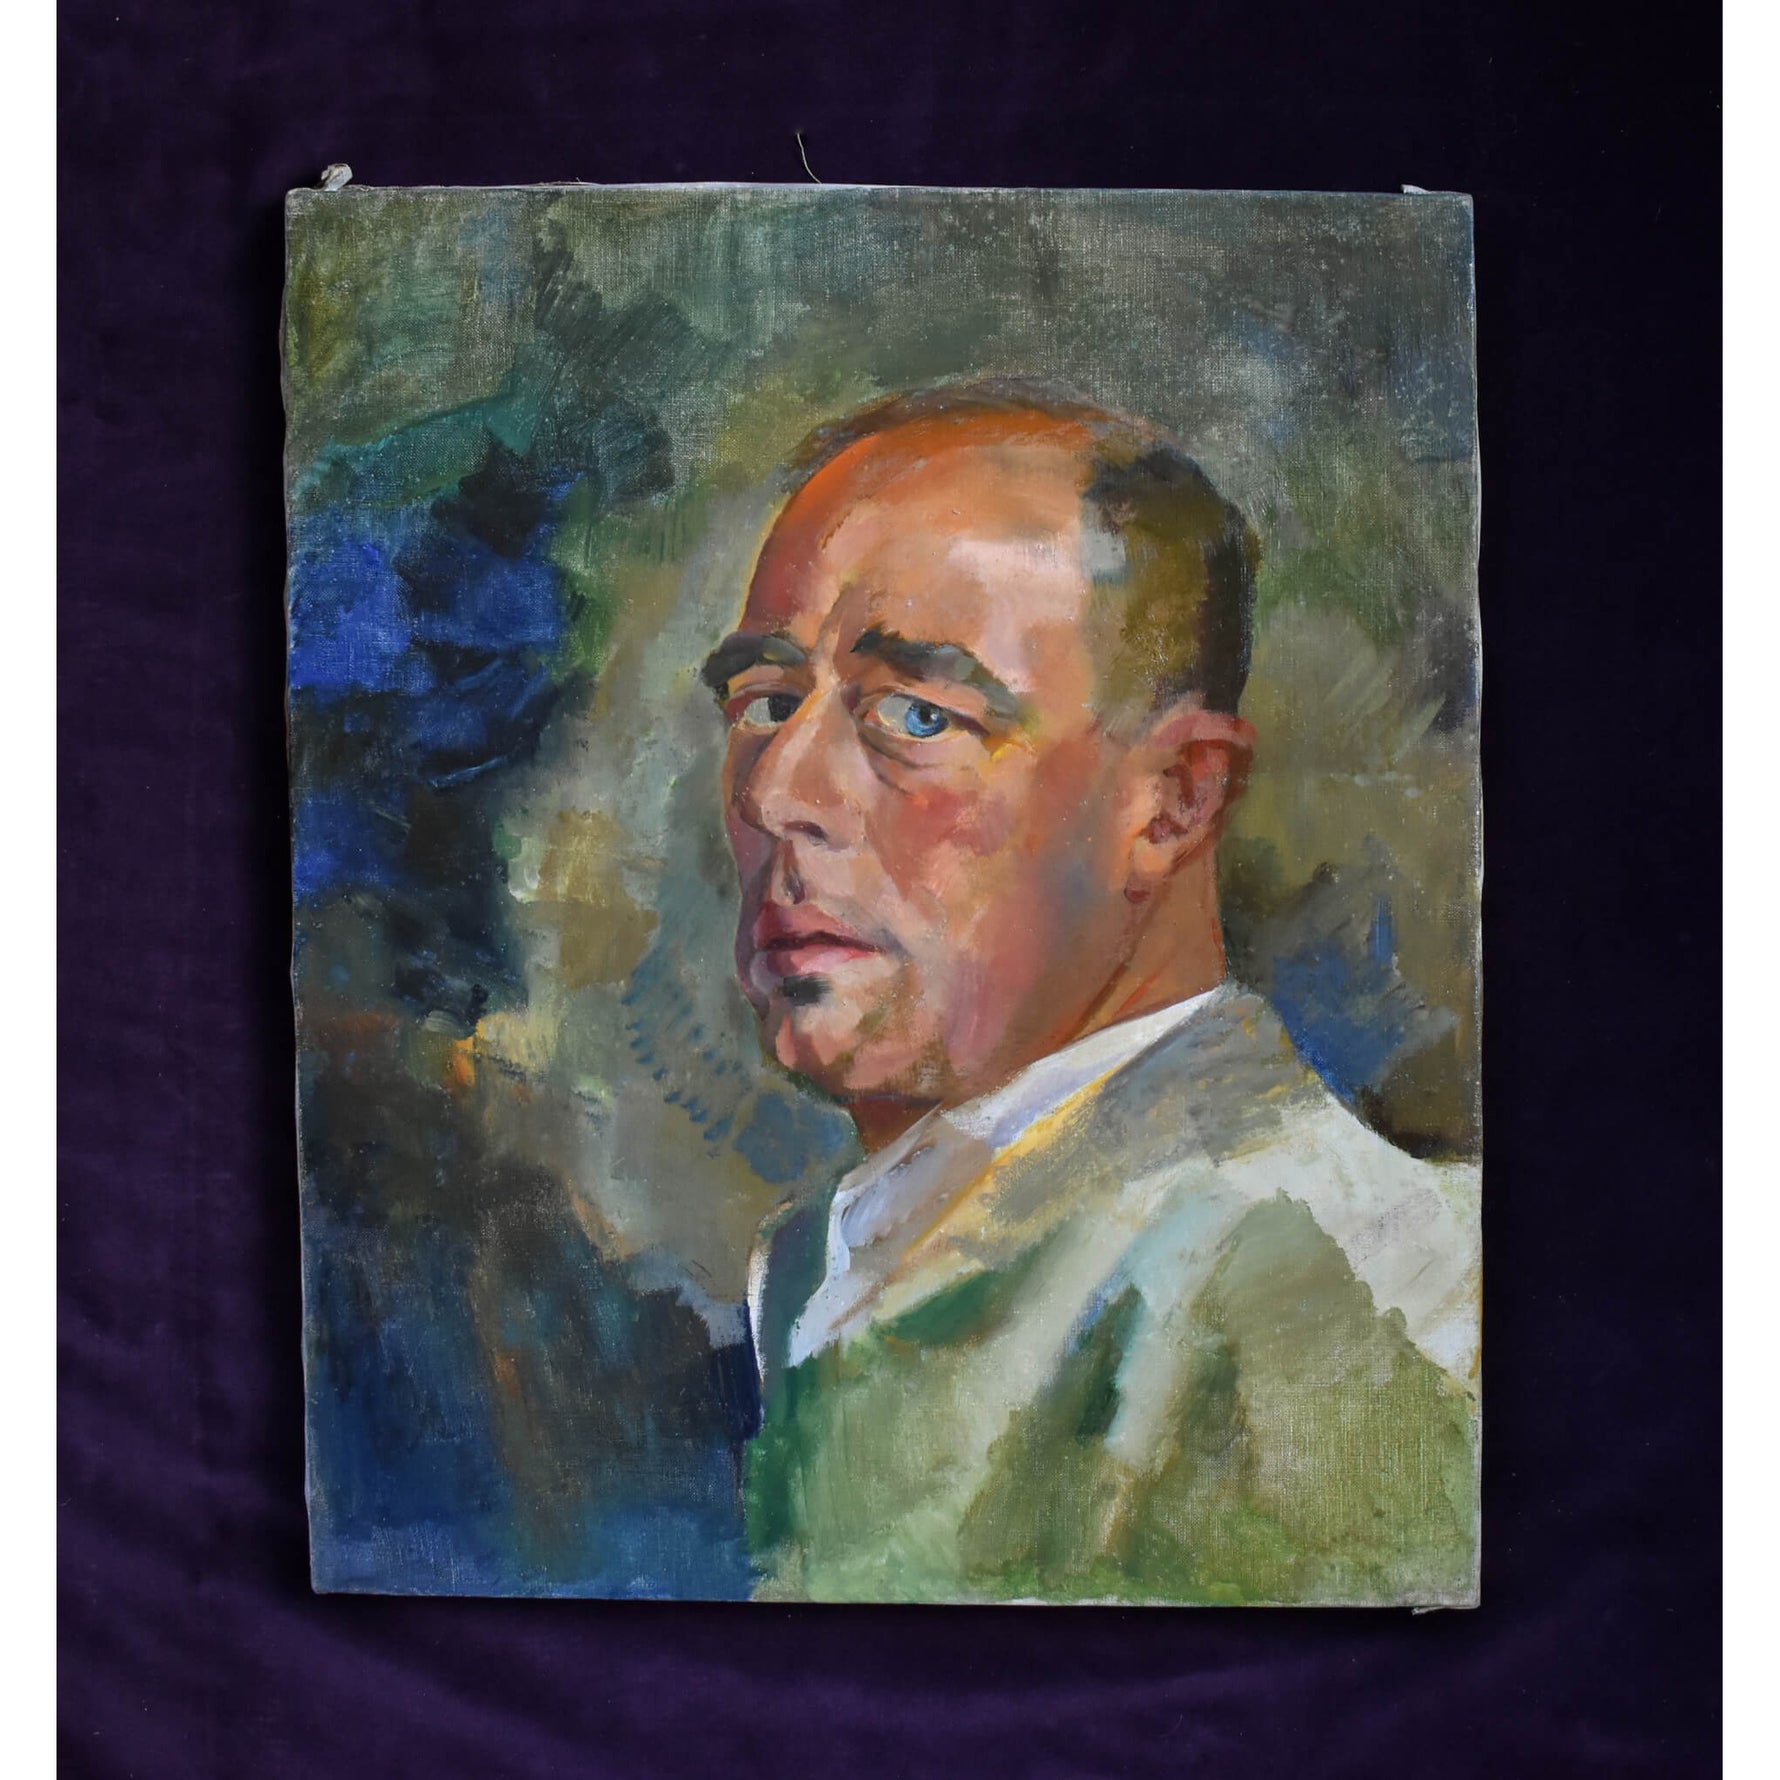 Vintage oil painting portrait of a blue eyes man circa 1935 by Belgian artist Edmond Dutry, for sale at Winckelmann Gallery